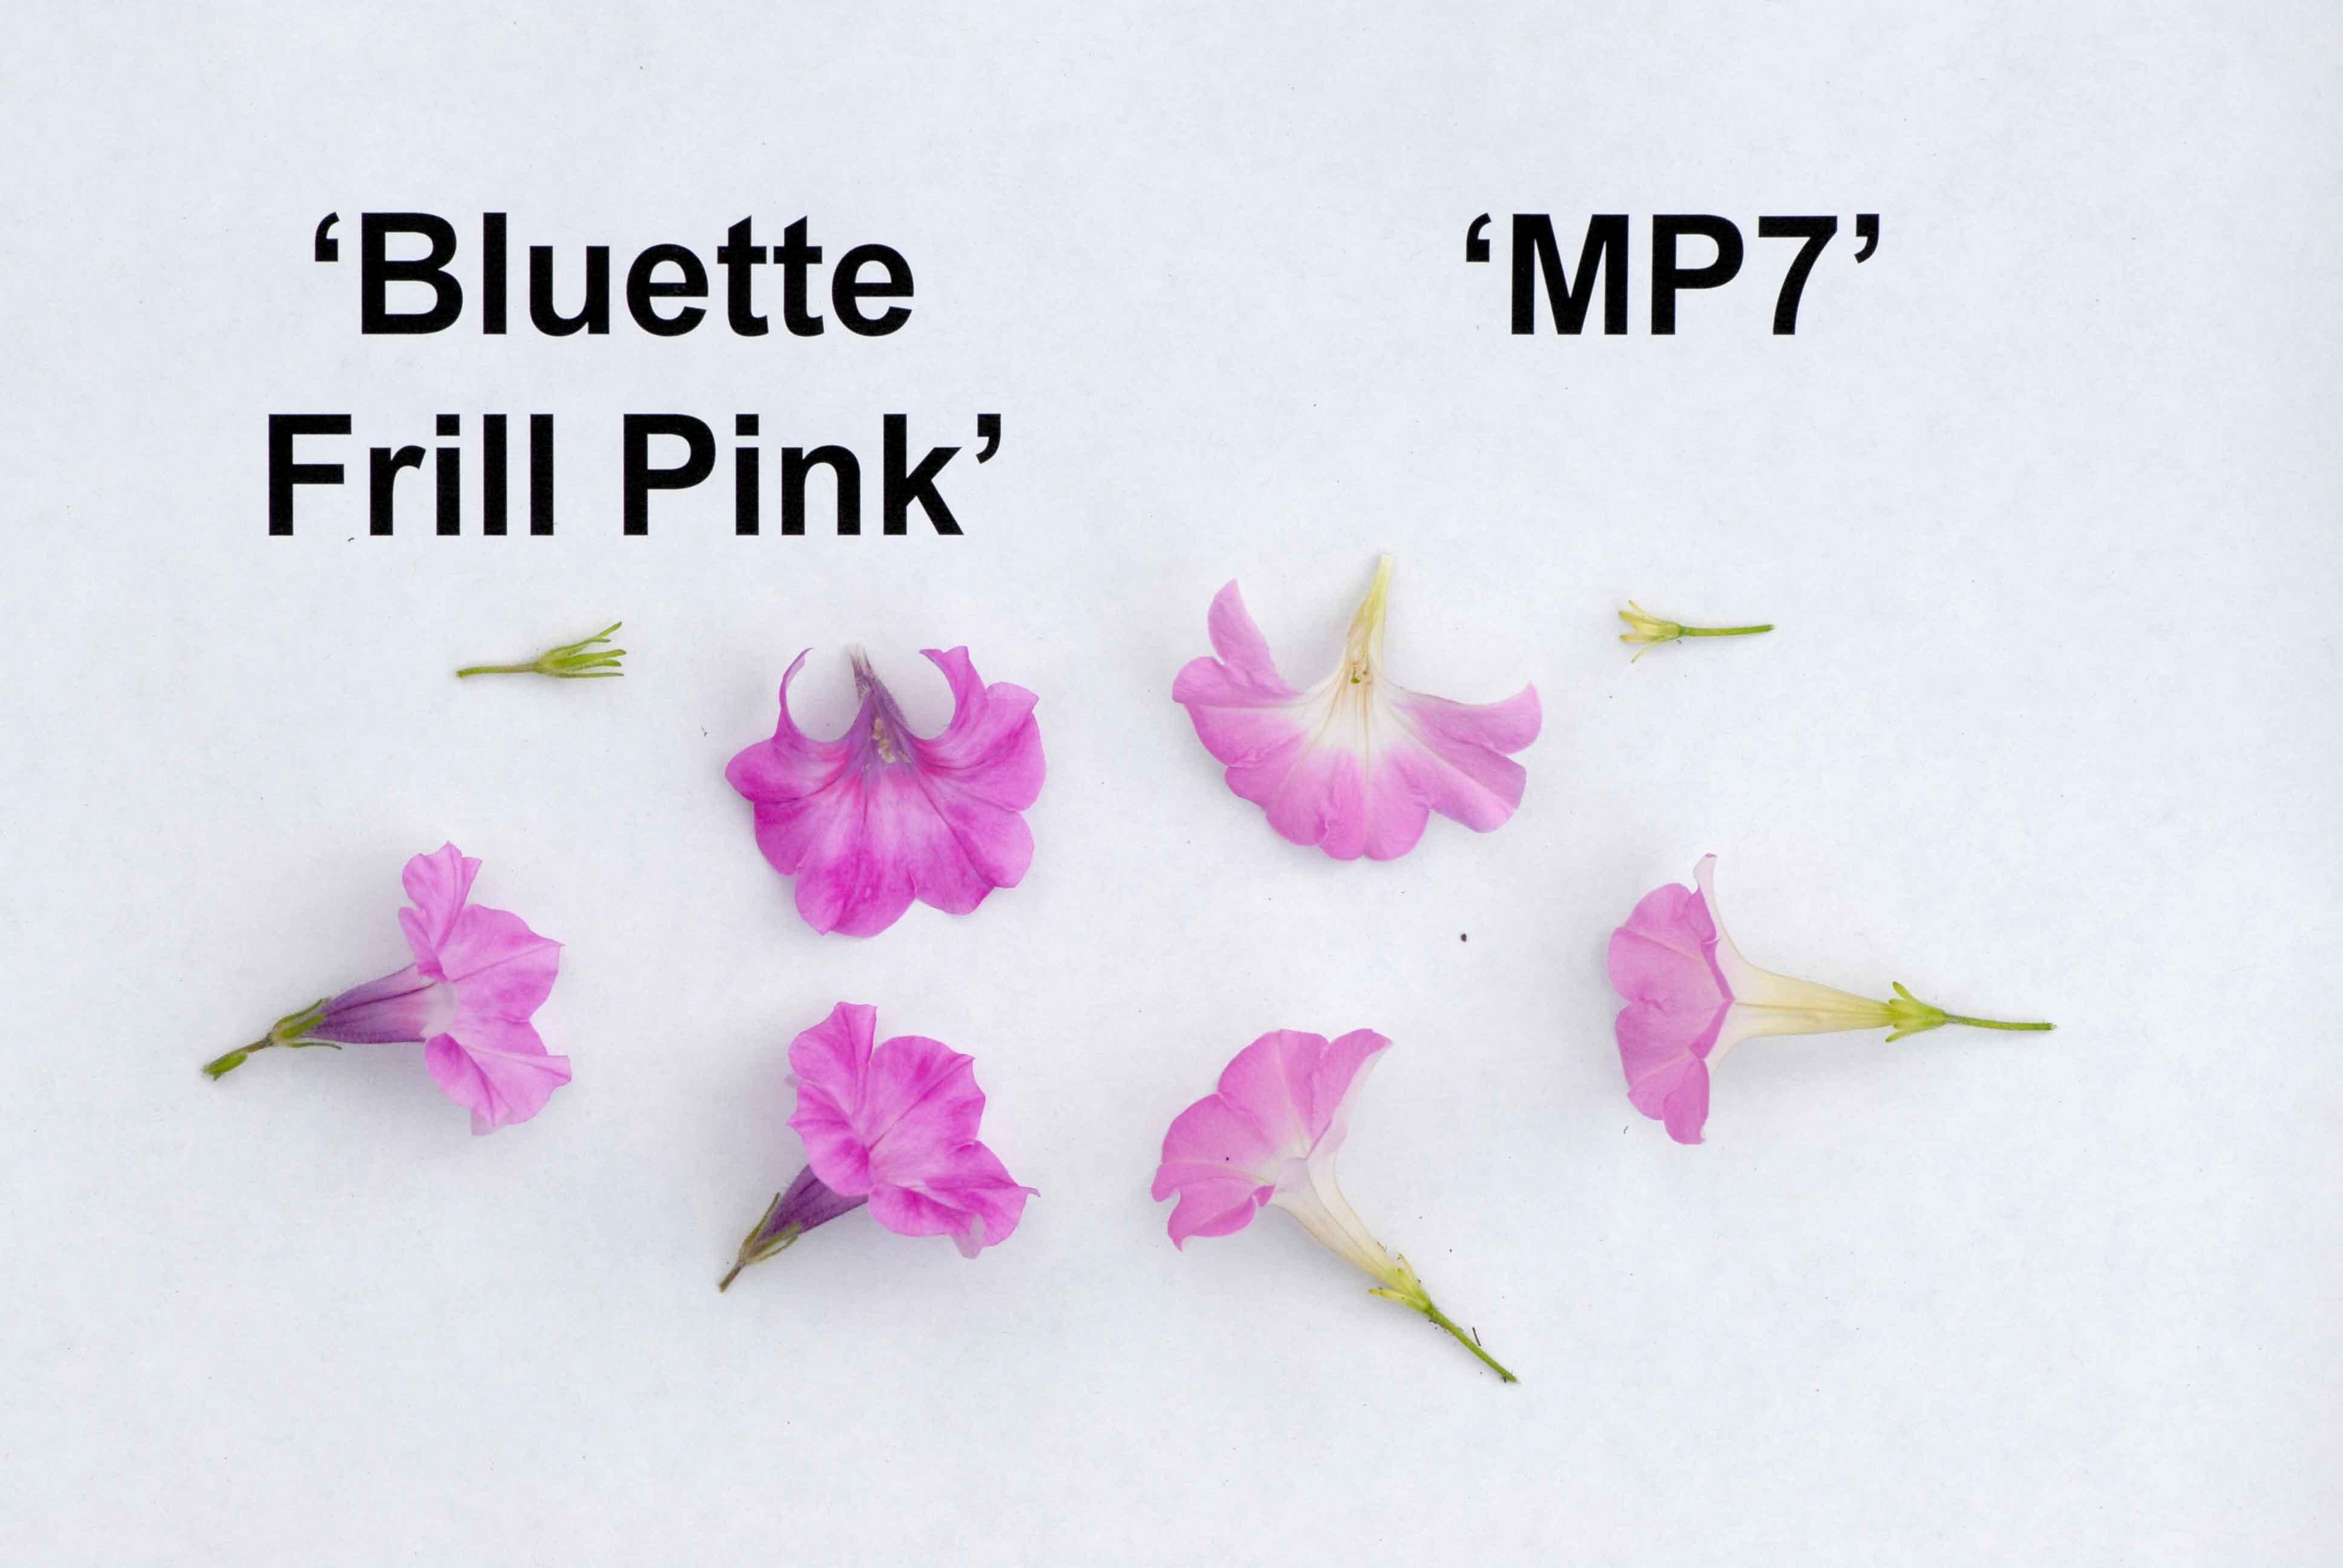 Bluette Frill Pink